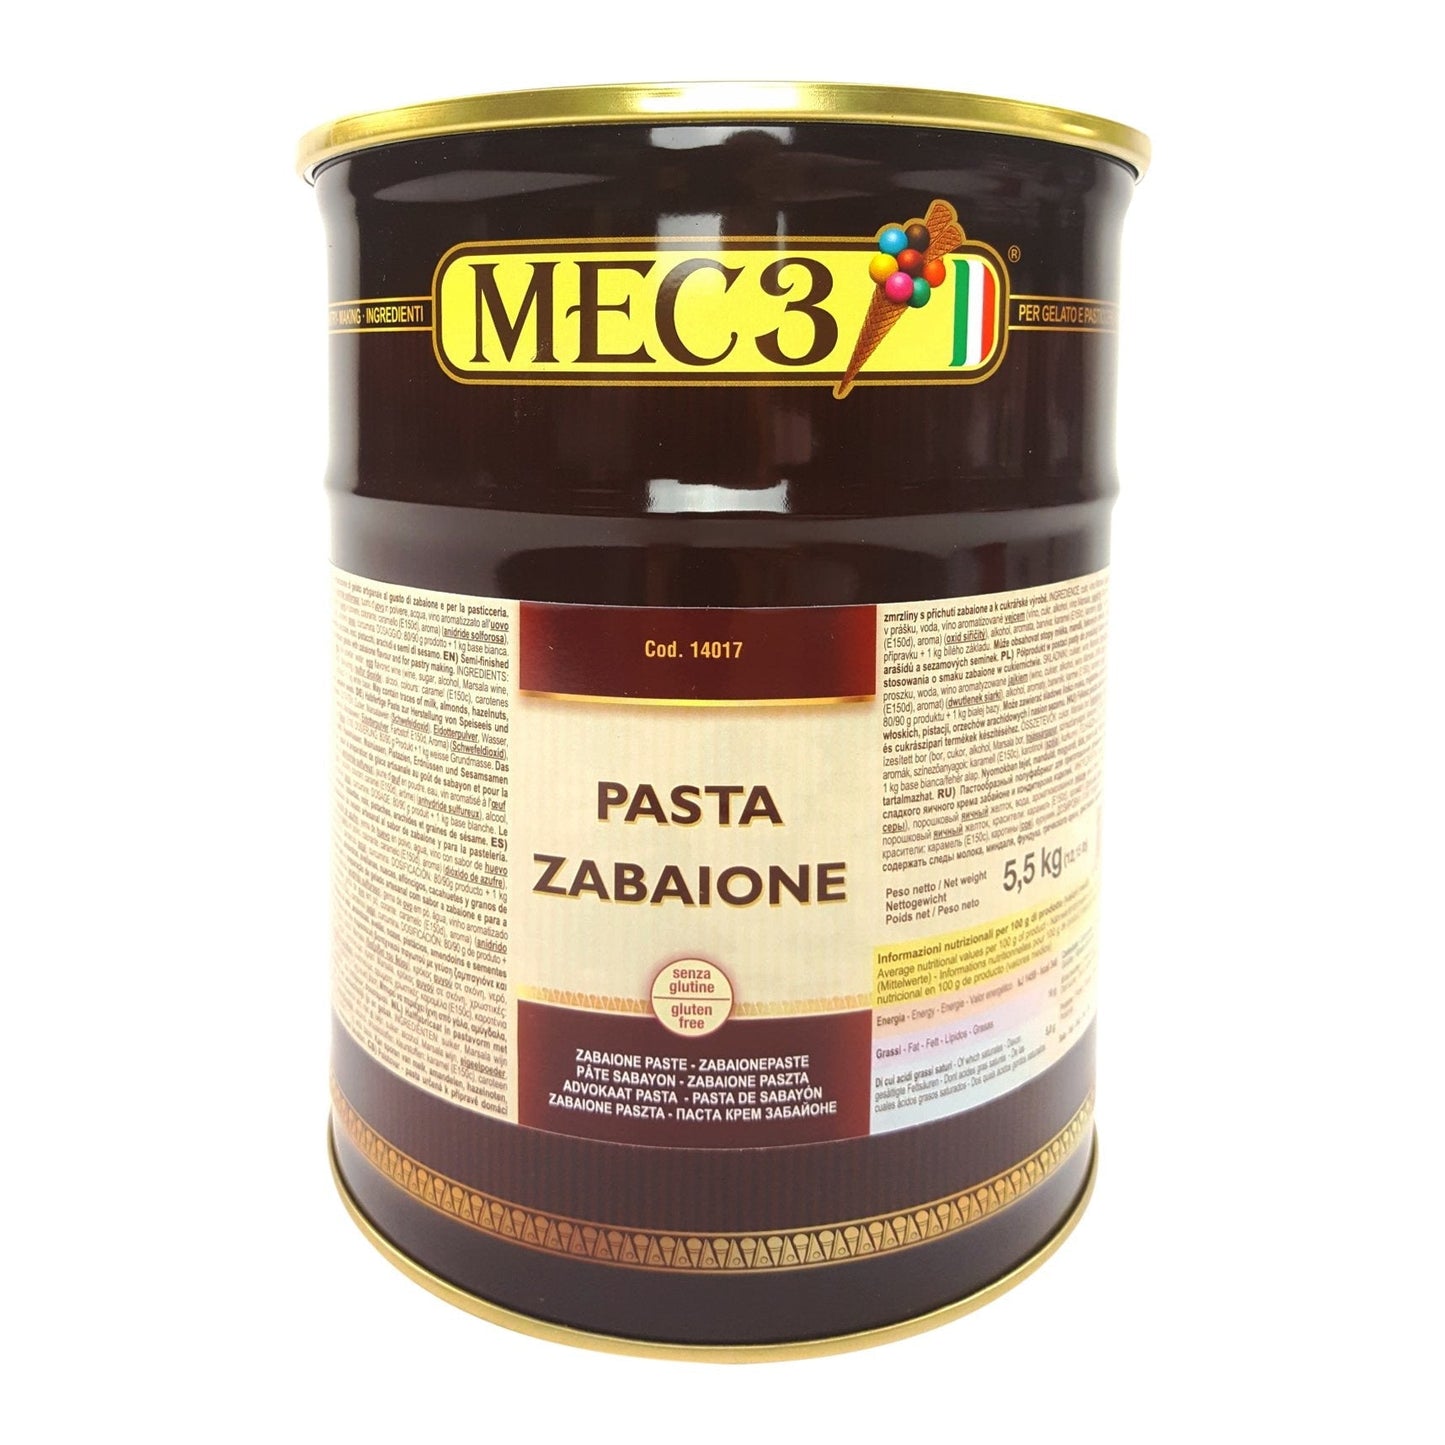 MEC3 Pasta Zabaione Gelato & Pastry Paste